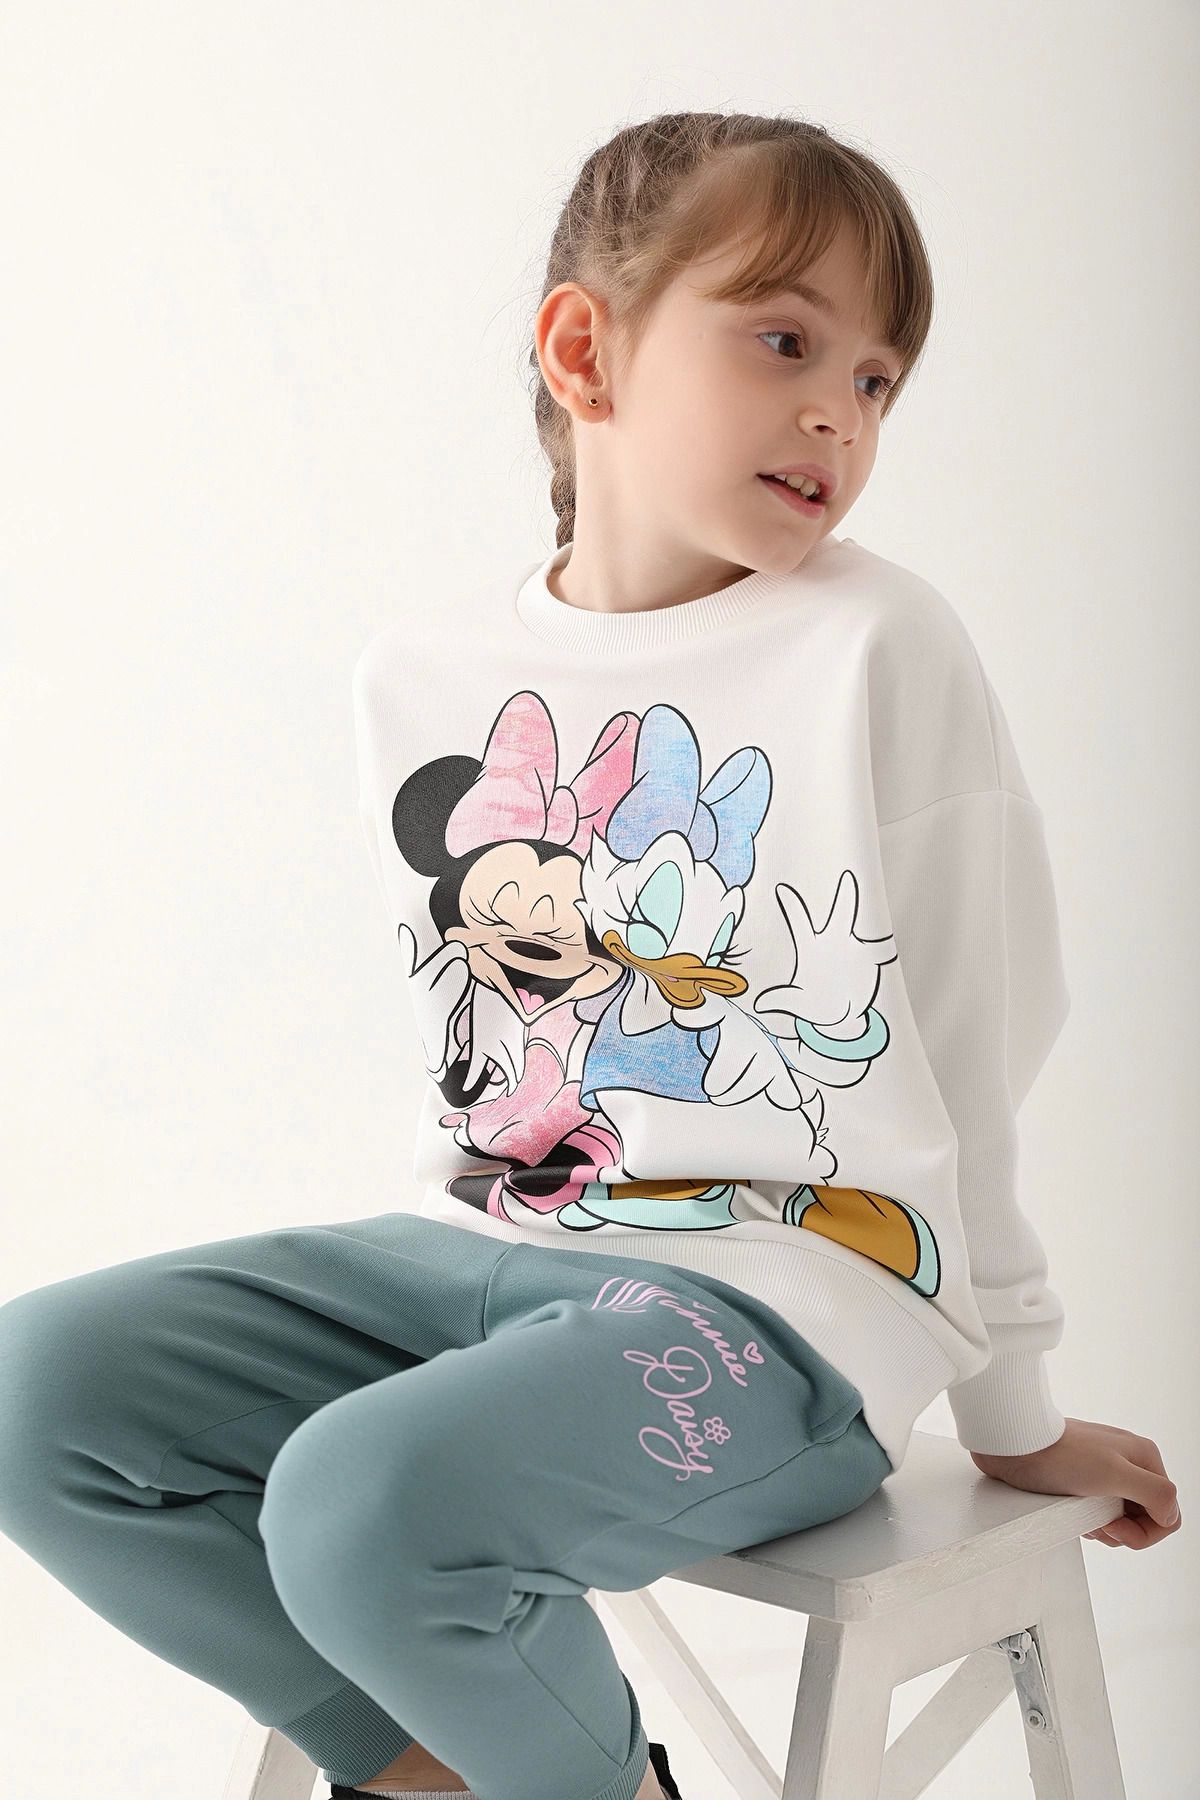 Güya Tekstil Disney 4815-3 Minnie Mouse Kız Çocuk Ikili Takım